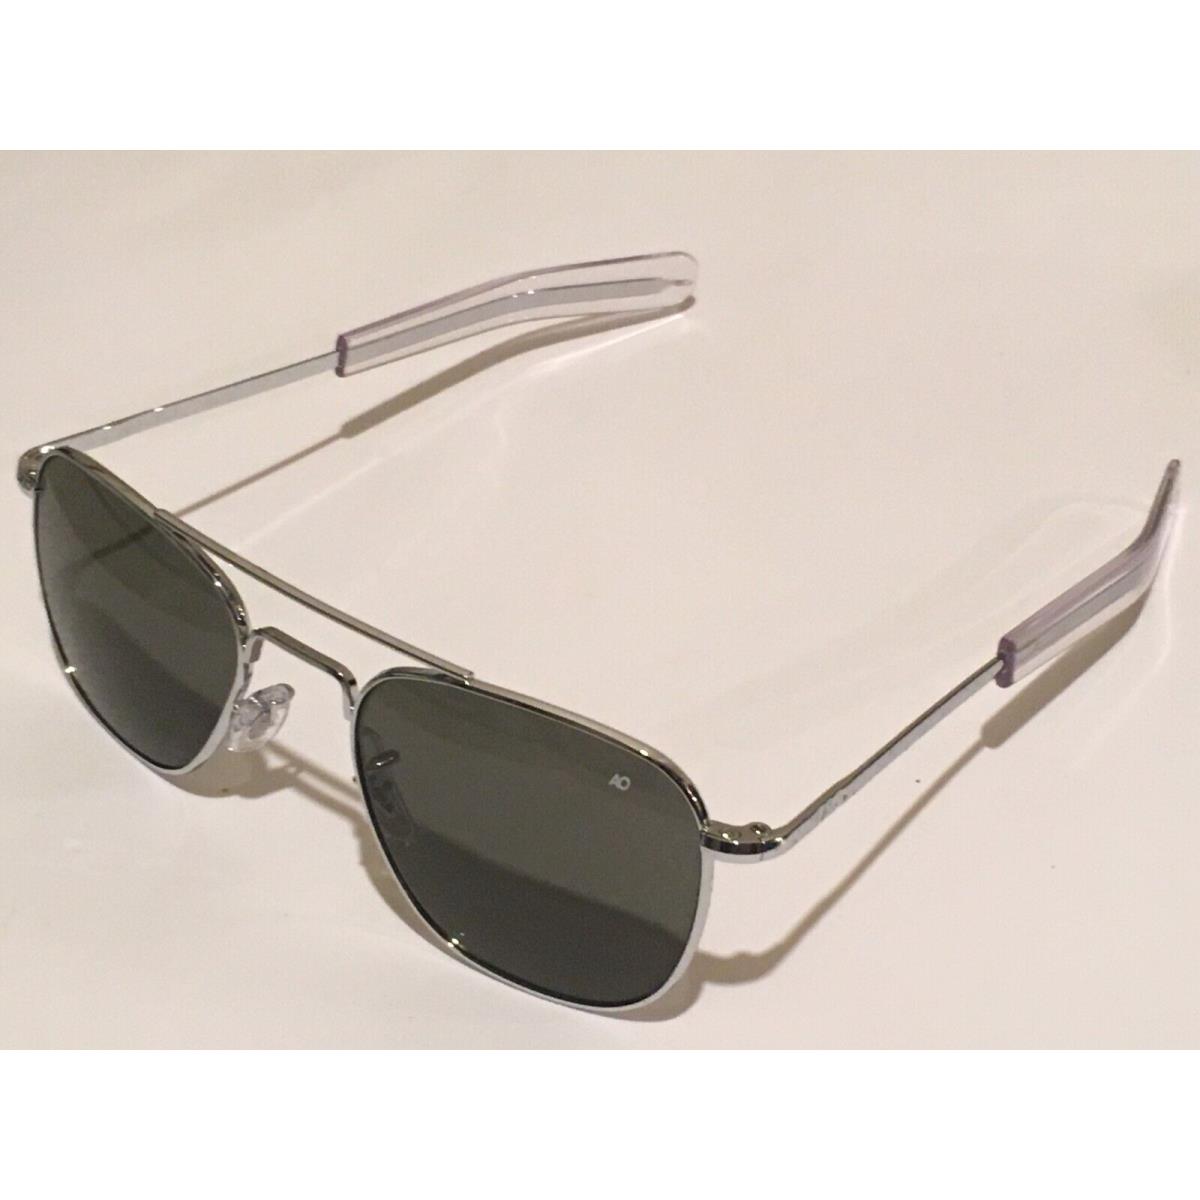 57mm Silver Frames American Optical AO Pilot Sunglasses